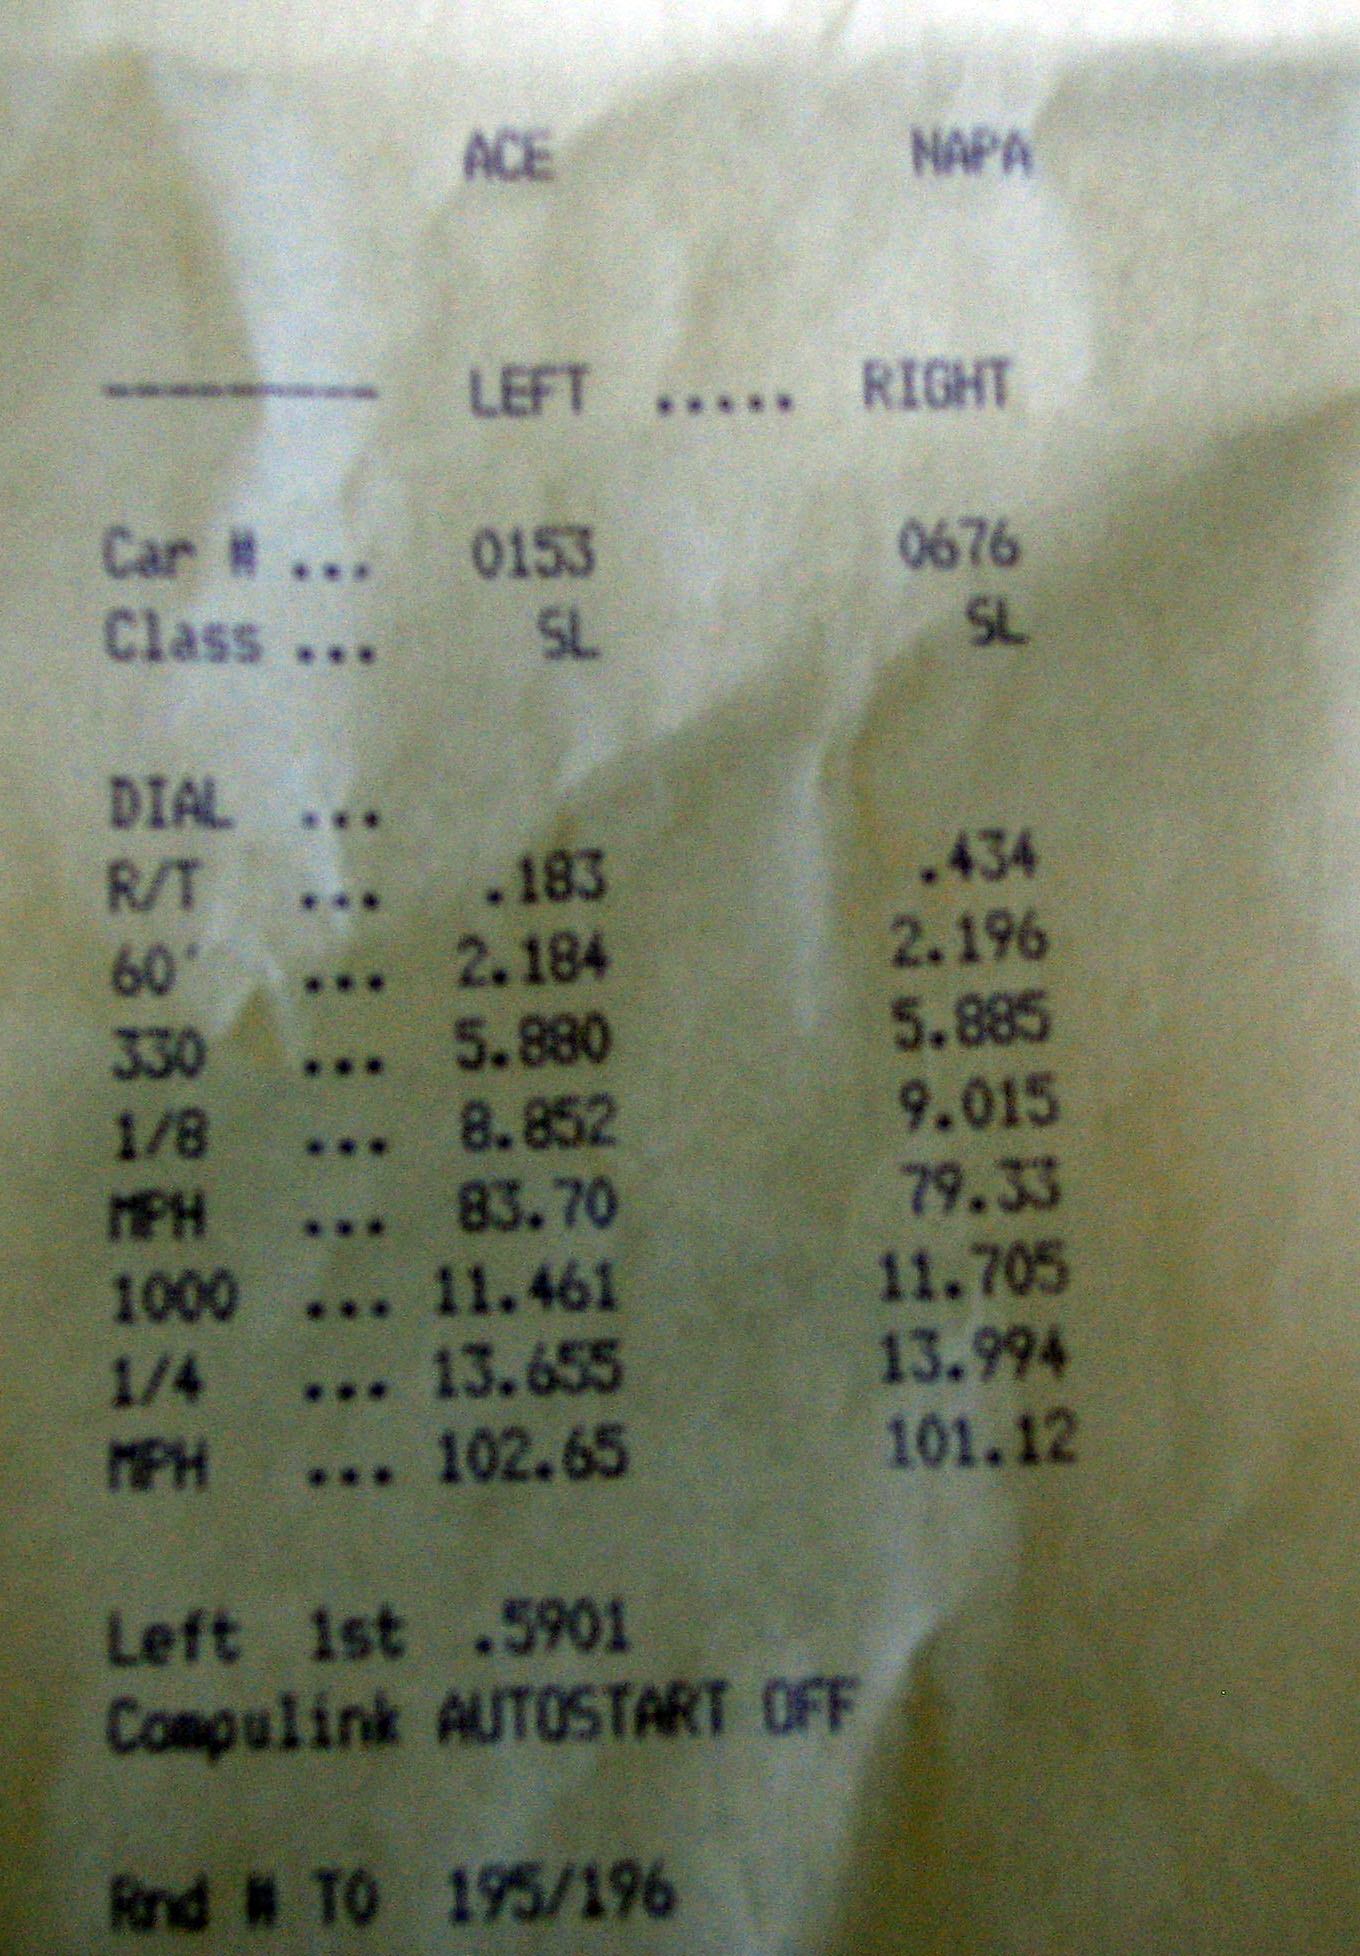 2006  Chevrolet Cobalt SS Supercharged Timeslip Scan